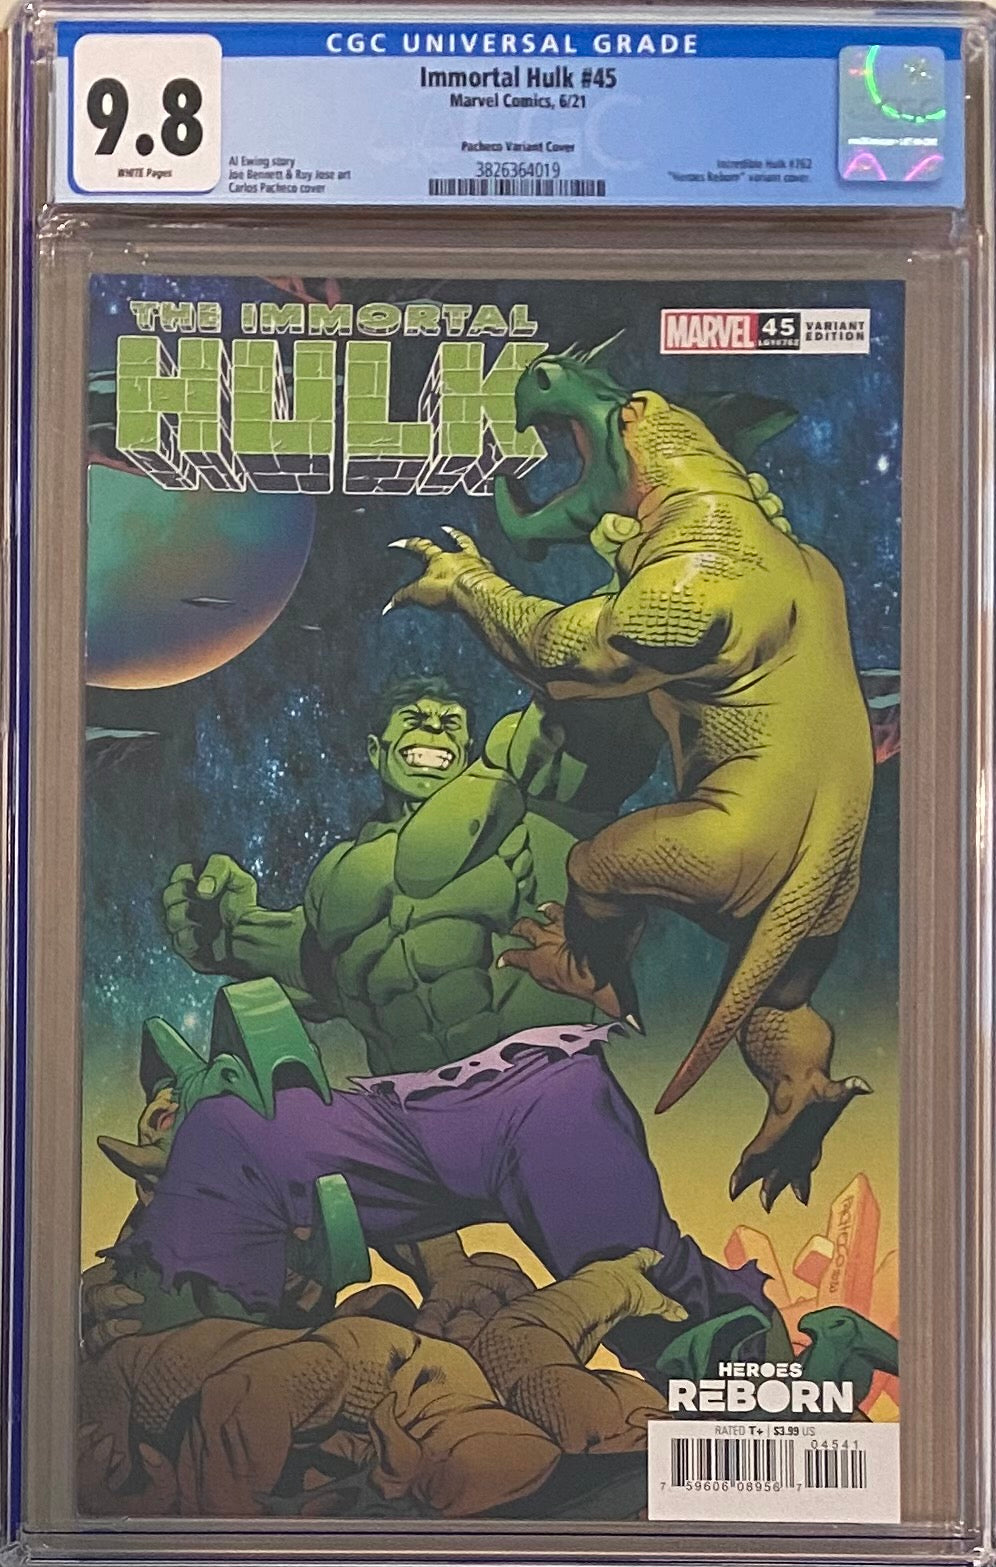 Immortal Hulk #45 "Heroes Reborn" Variant CGC 9.8